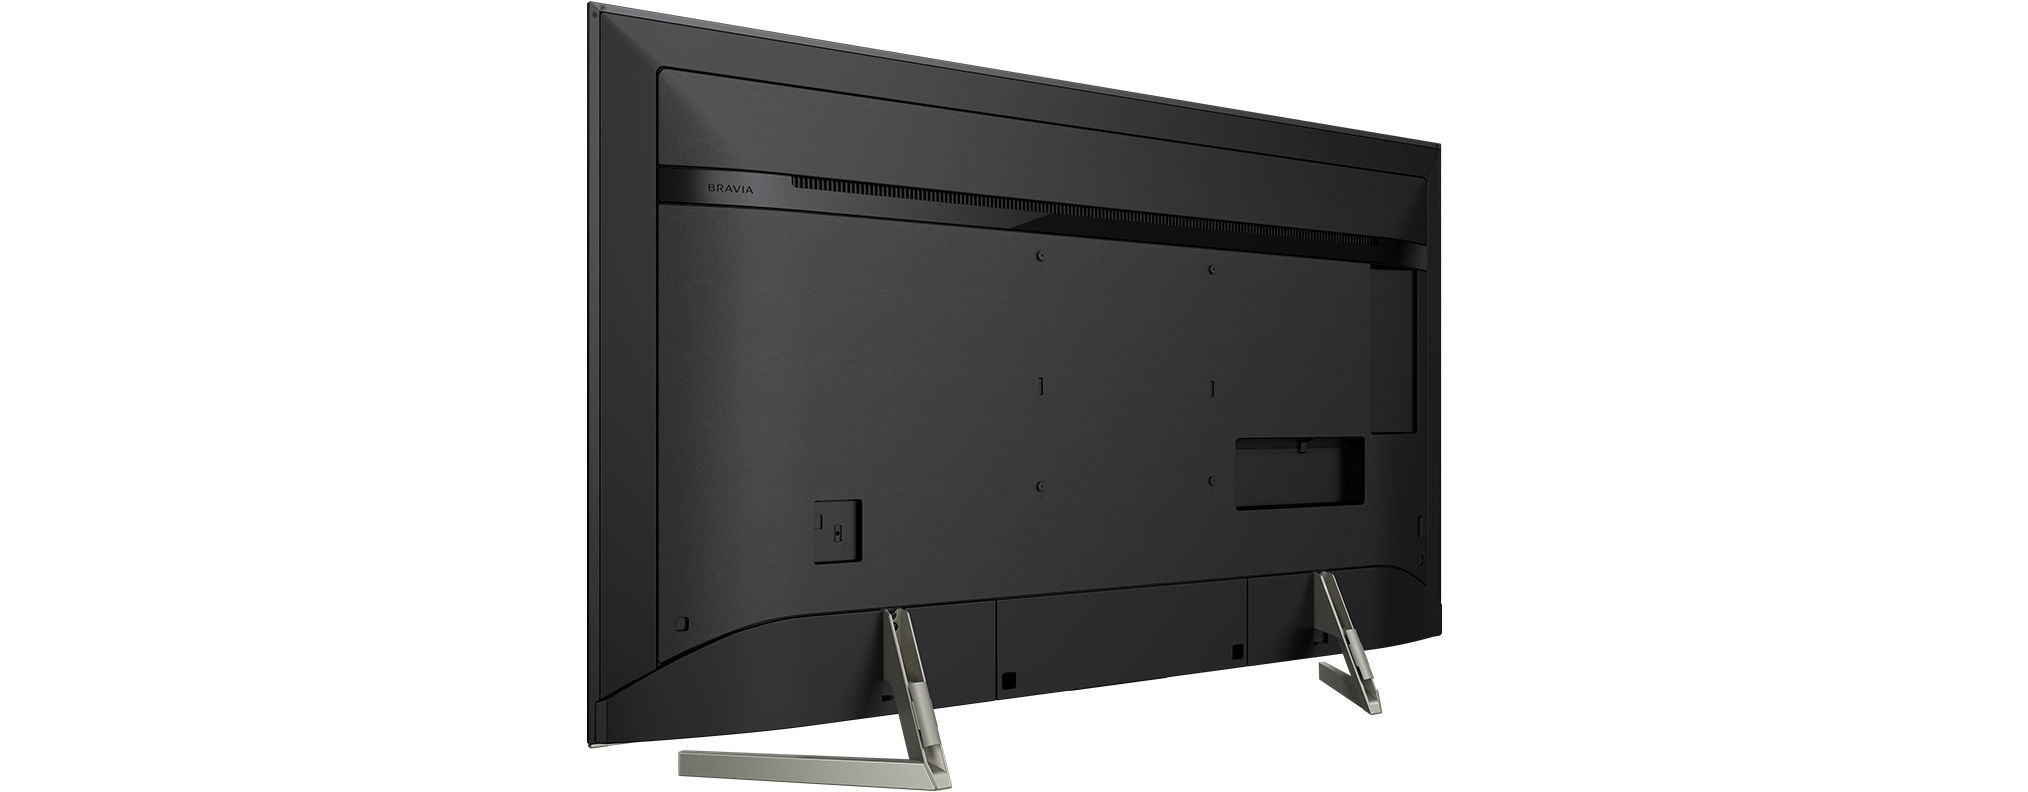 SONY KD-55XF9005 LED TV (Flat, Zoll Android 55 TV) UHD TV, 4K, cm, 139 / SMART